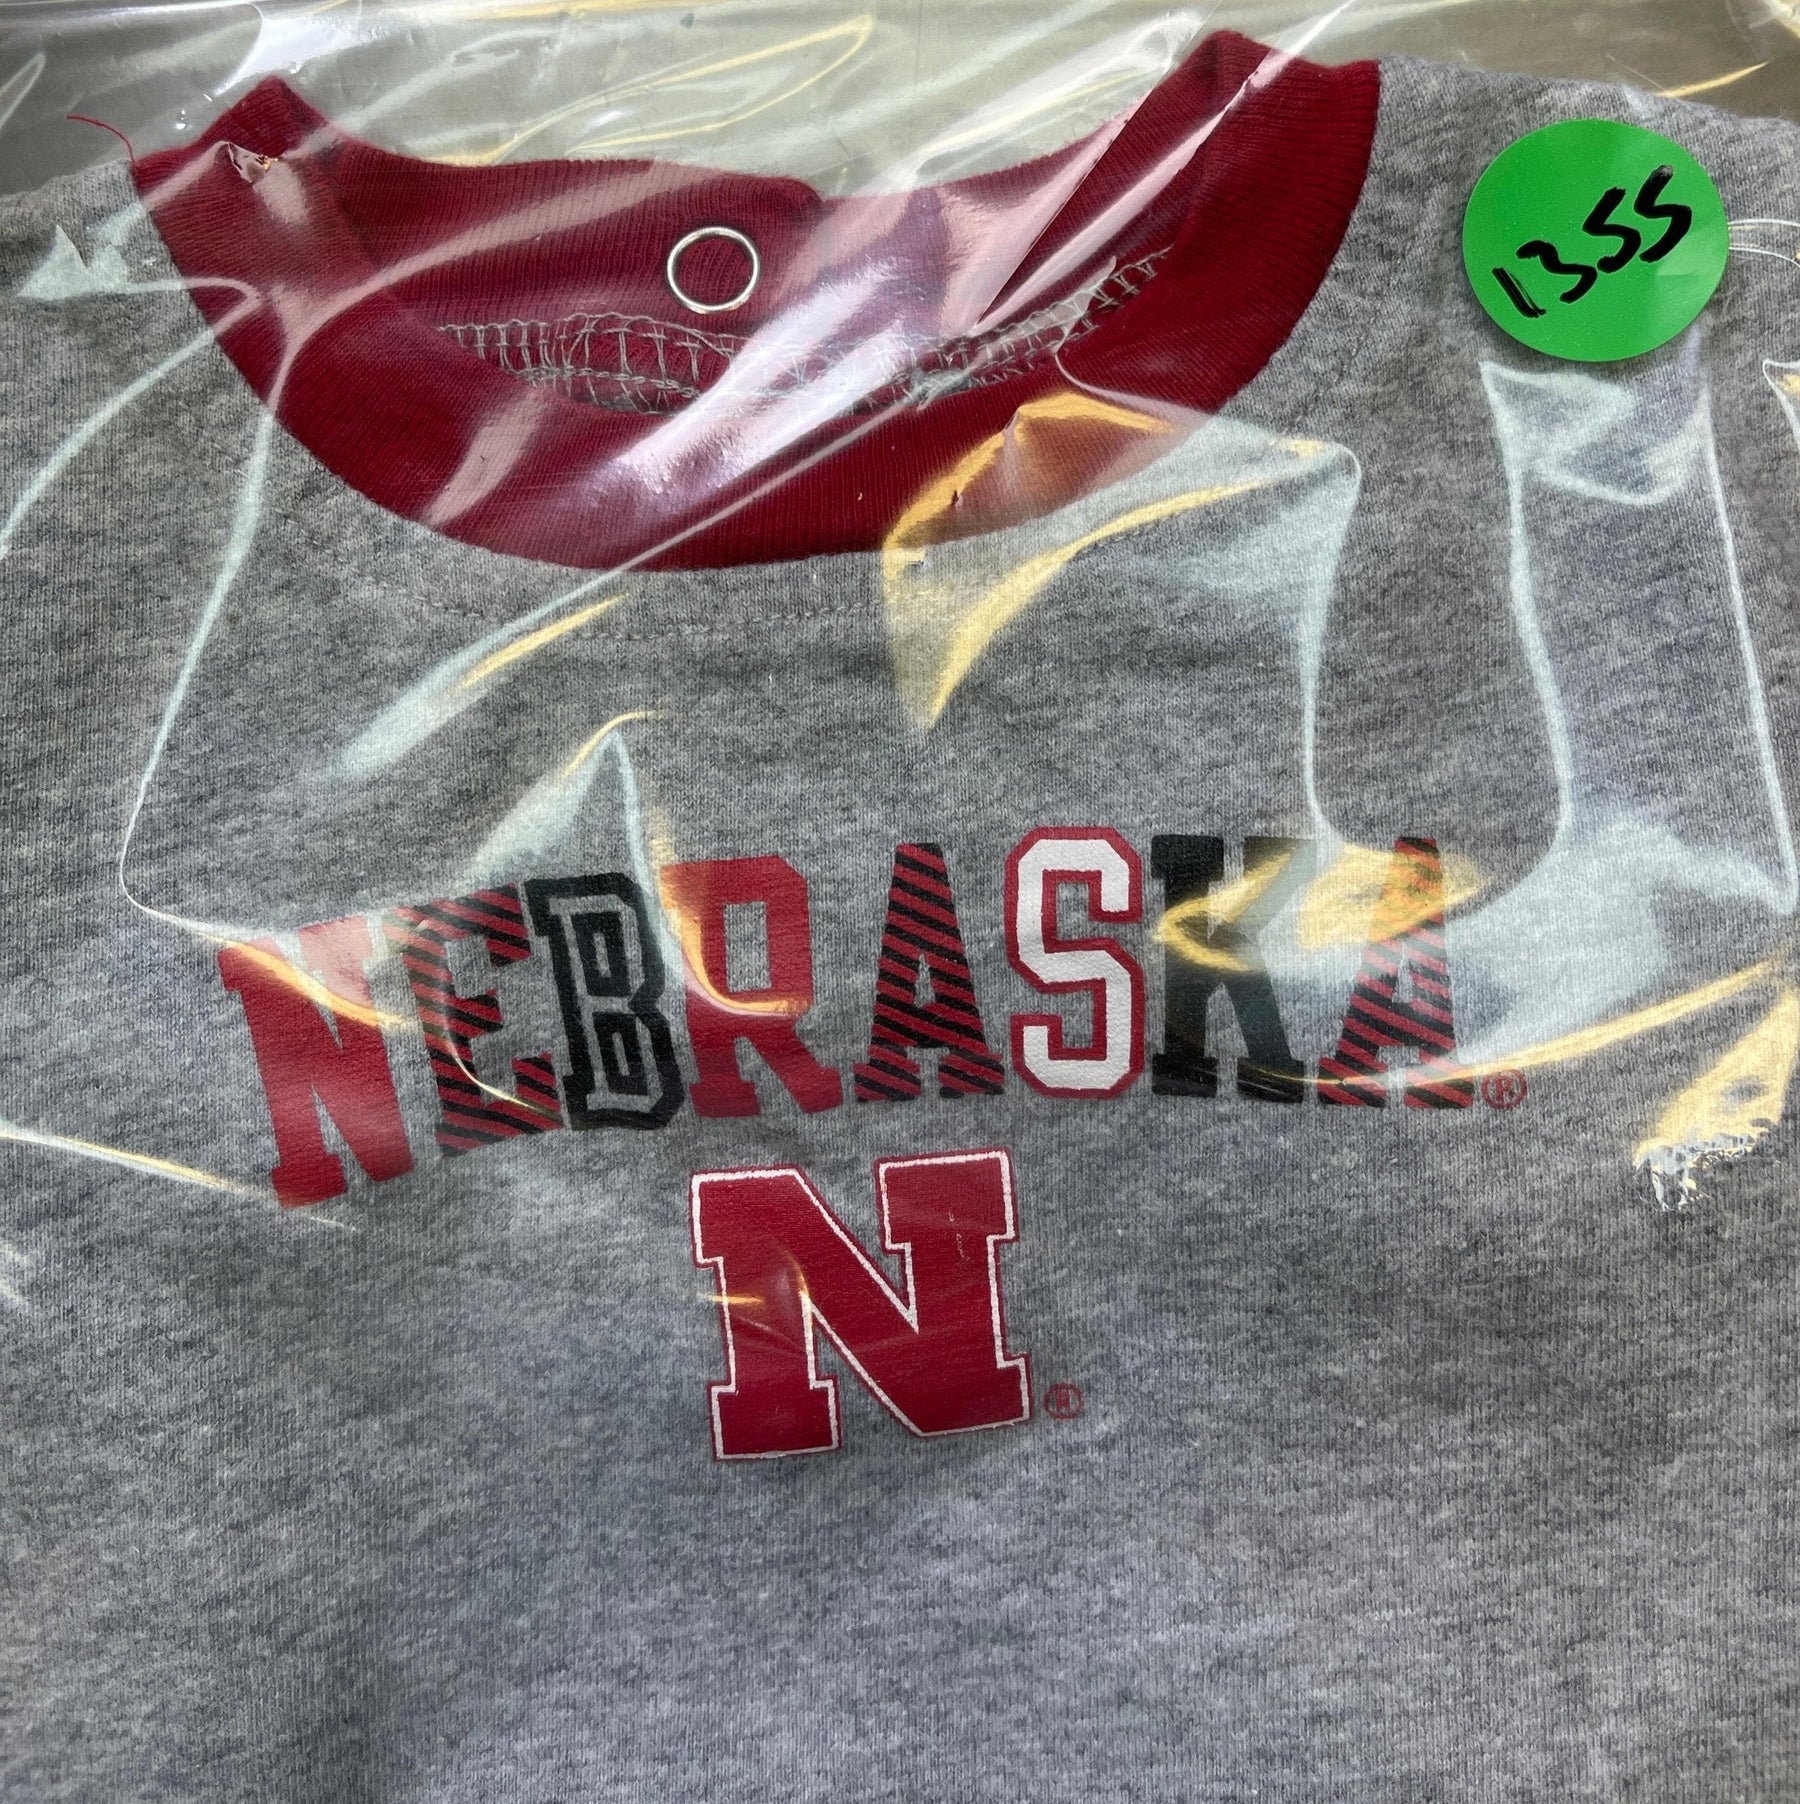 NCAA Nebraska Cornhuskers Adidas Grey Bodysuit 3-6 months